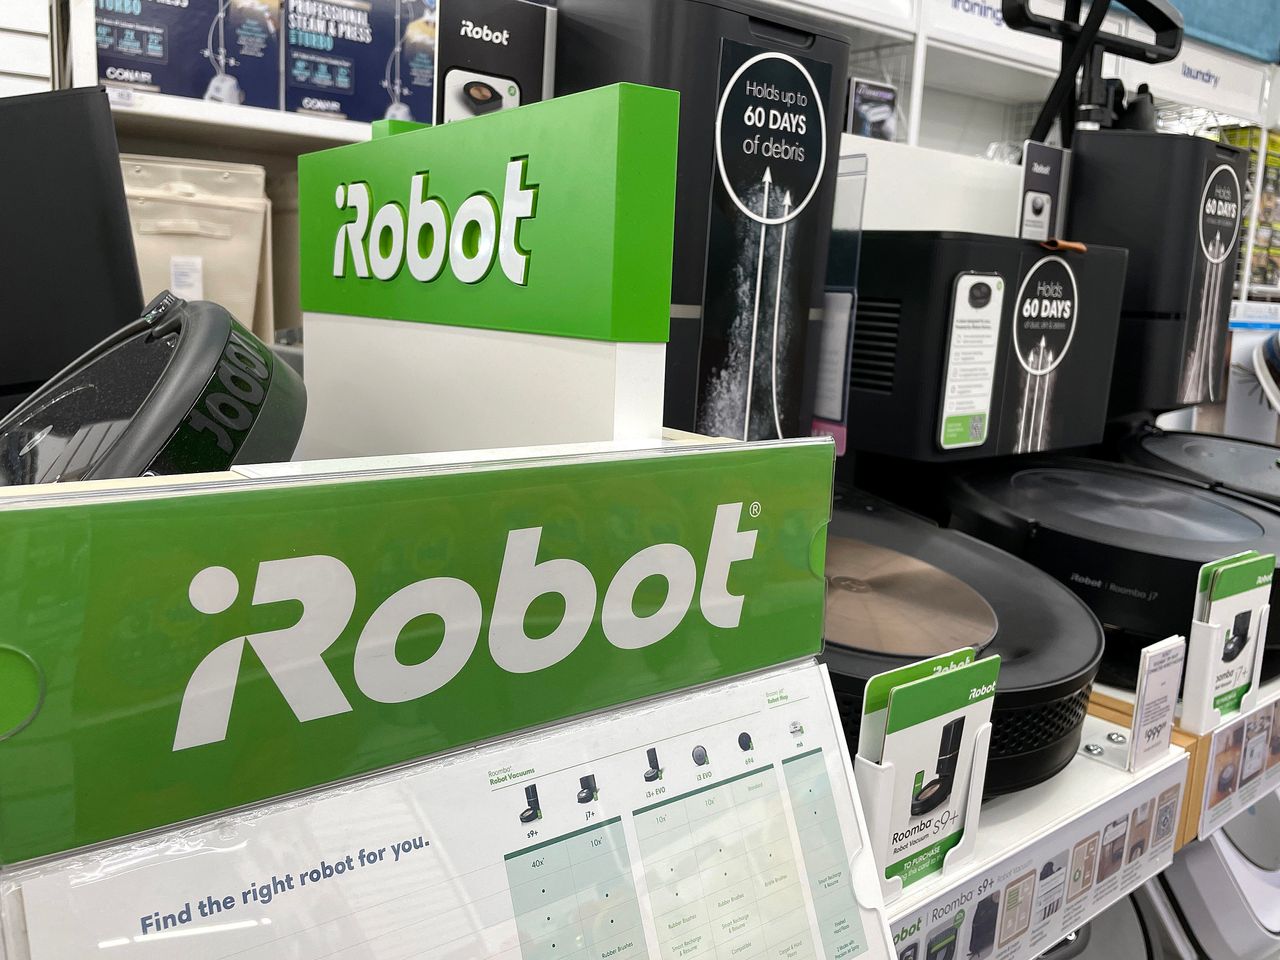 Amazon’s IRobot Acquisition Faces Regulatory Scrutiny